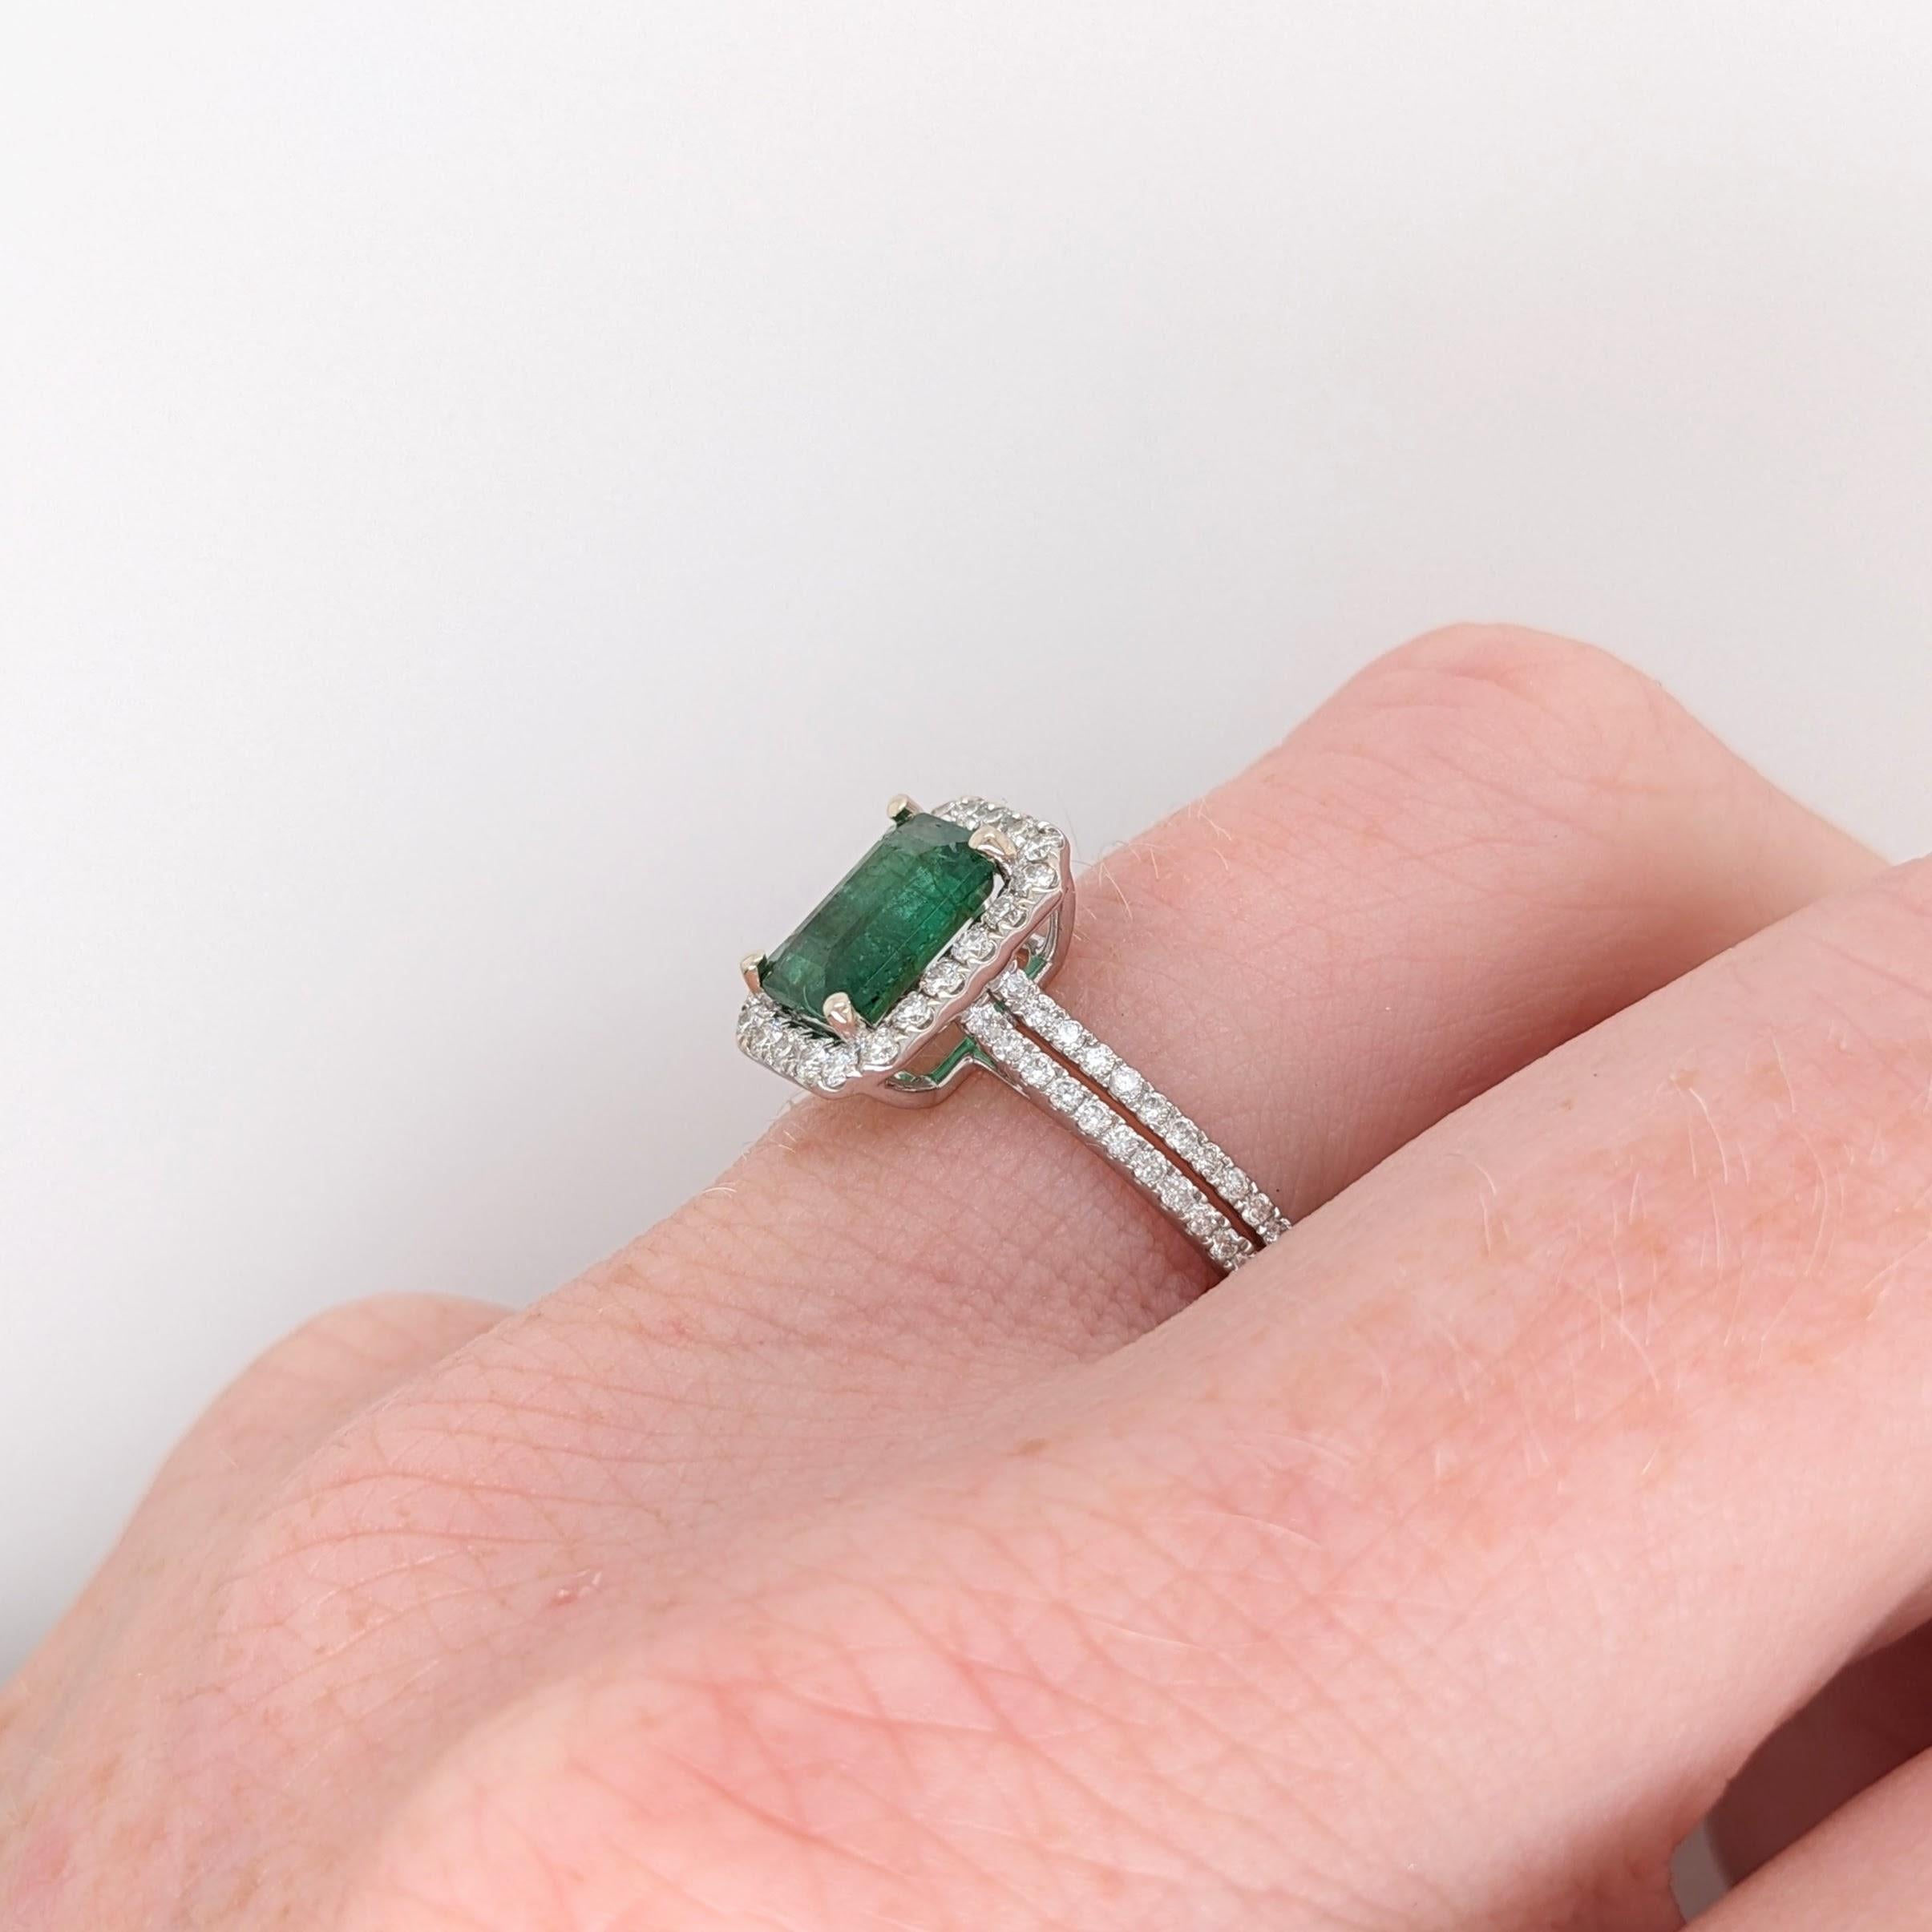 1.27ct Emerald Ring w Natural Diamond Halo in 14K White Gold Emerald Cut 8x6mm 3